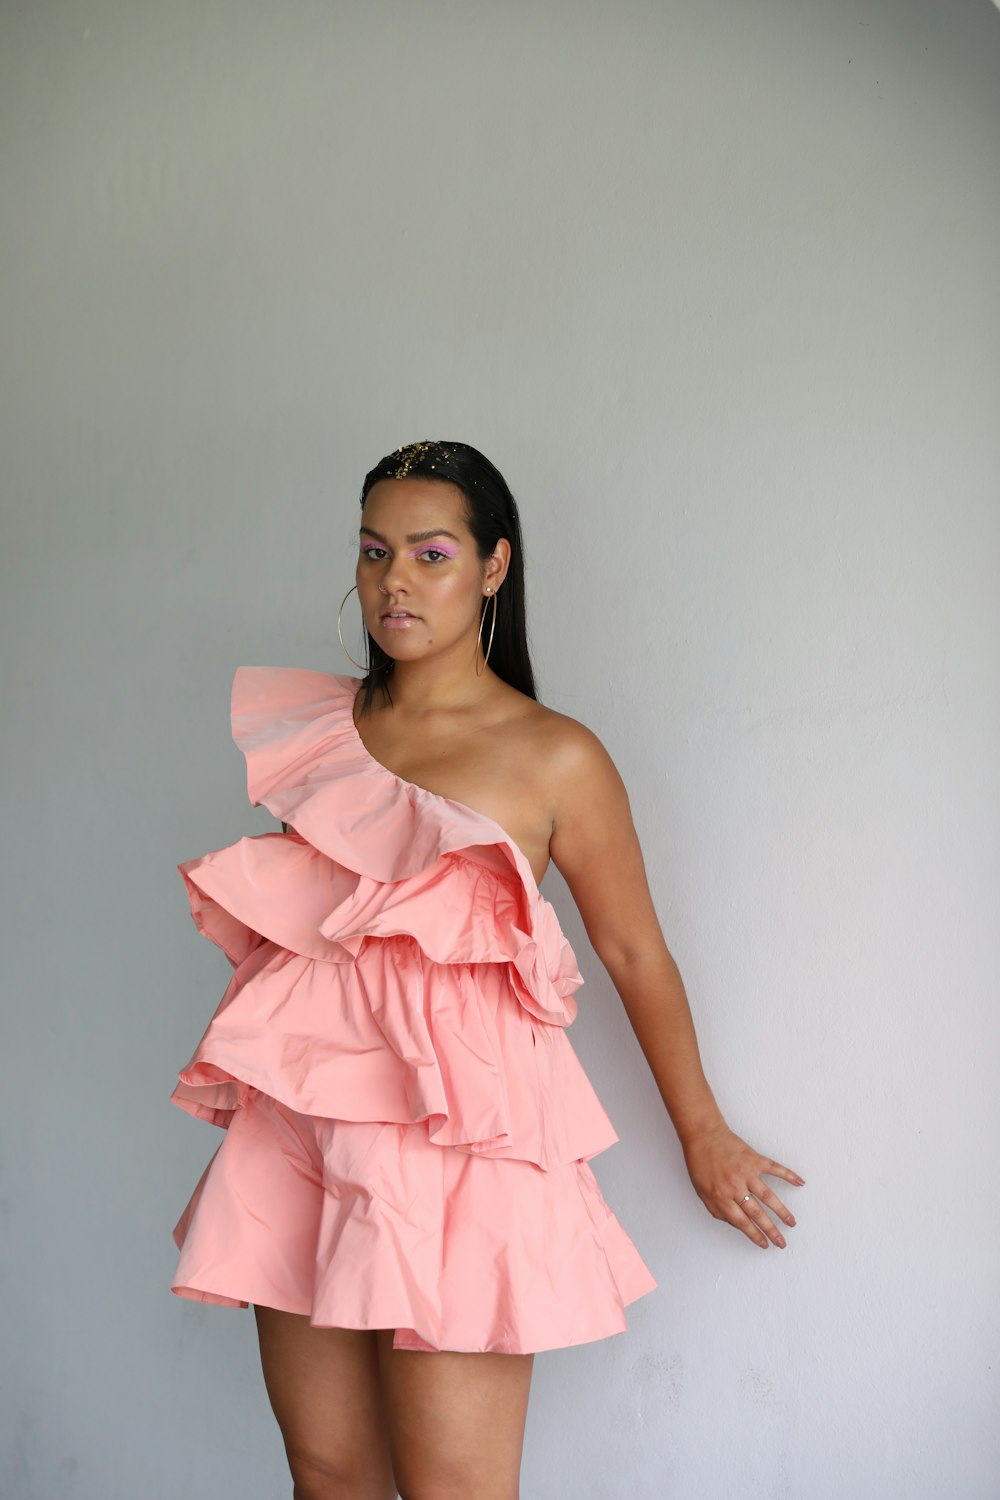 woman in pink one-shoulder dress photo – Free Grey Image on Unsplash